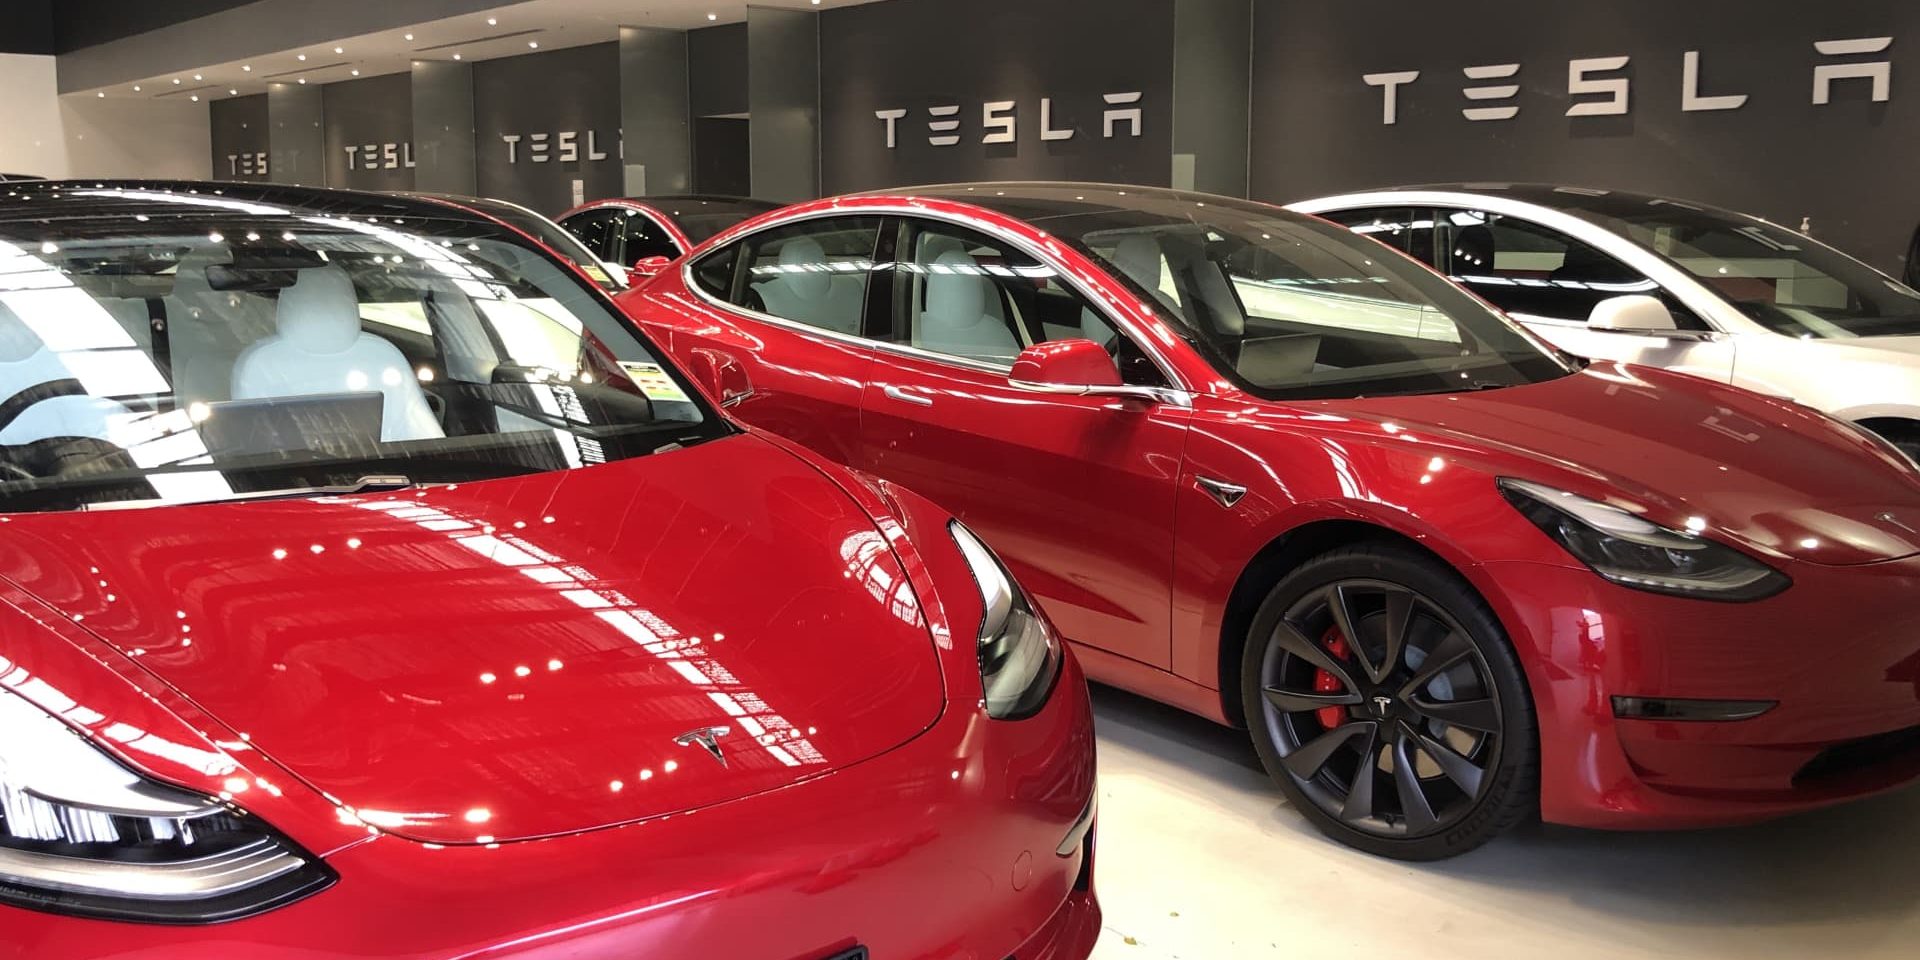 Tesla marks major production milestone